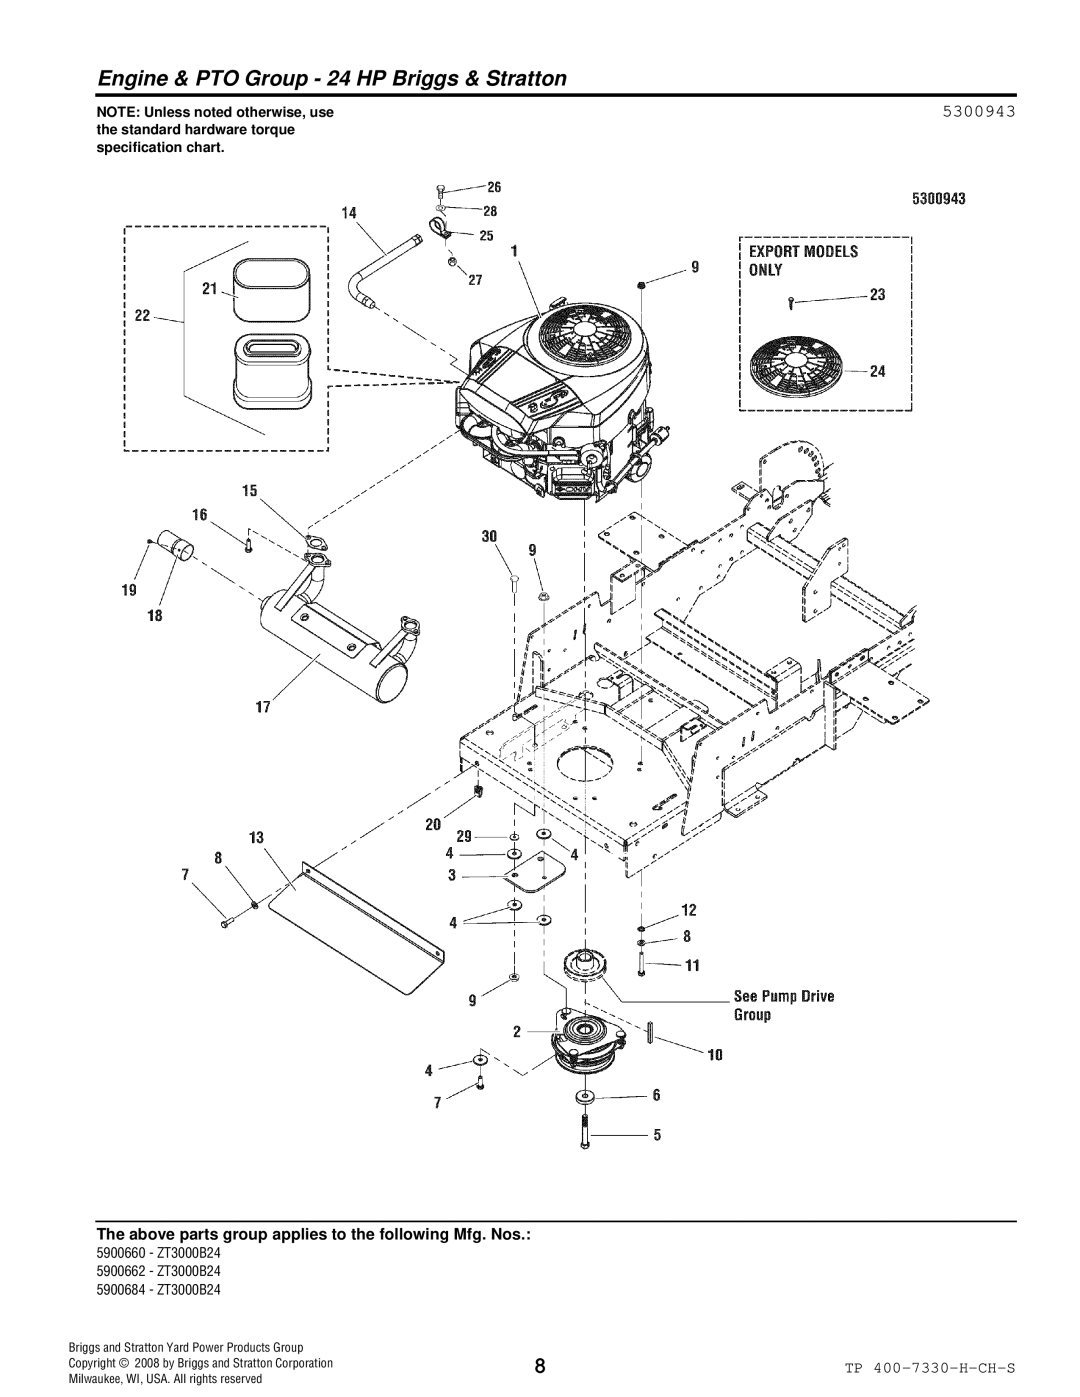 Simplicity ZT3000 manual Engine & PTO Group 24 HP Briggs & Stratton, 5300943 